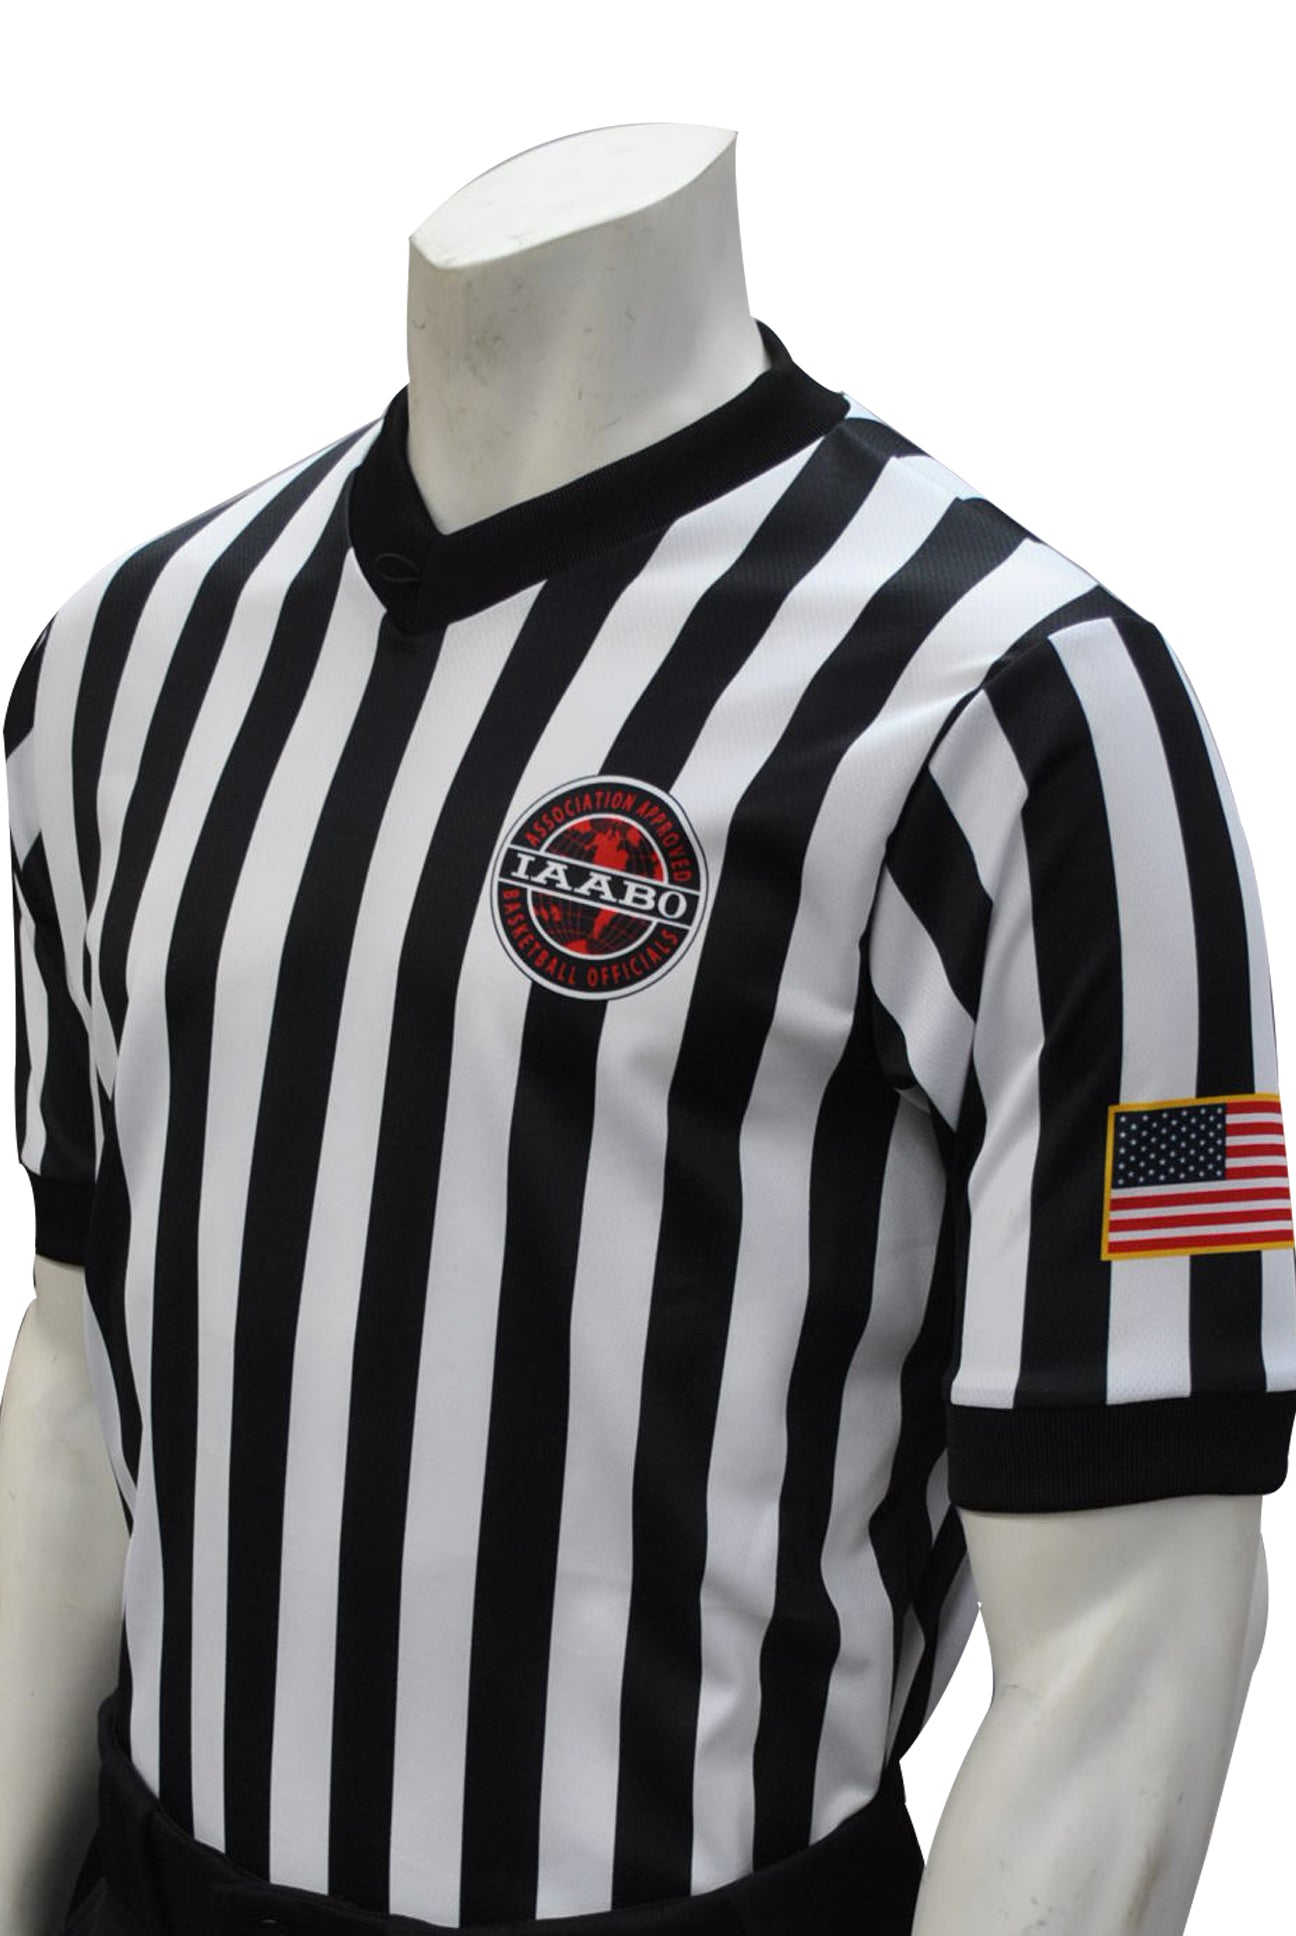 I200MD-GFSL - Smitty "Made in USA" - IAABO Basketball Men's Short Sleeve Shirt